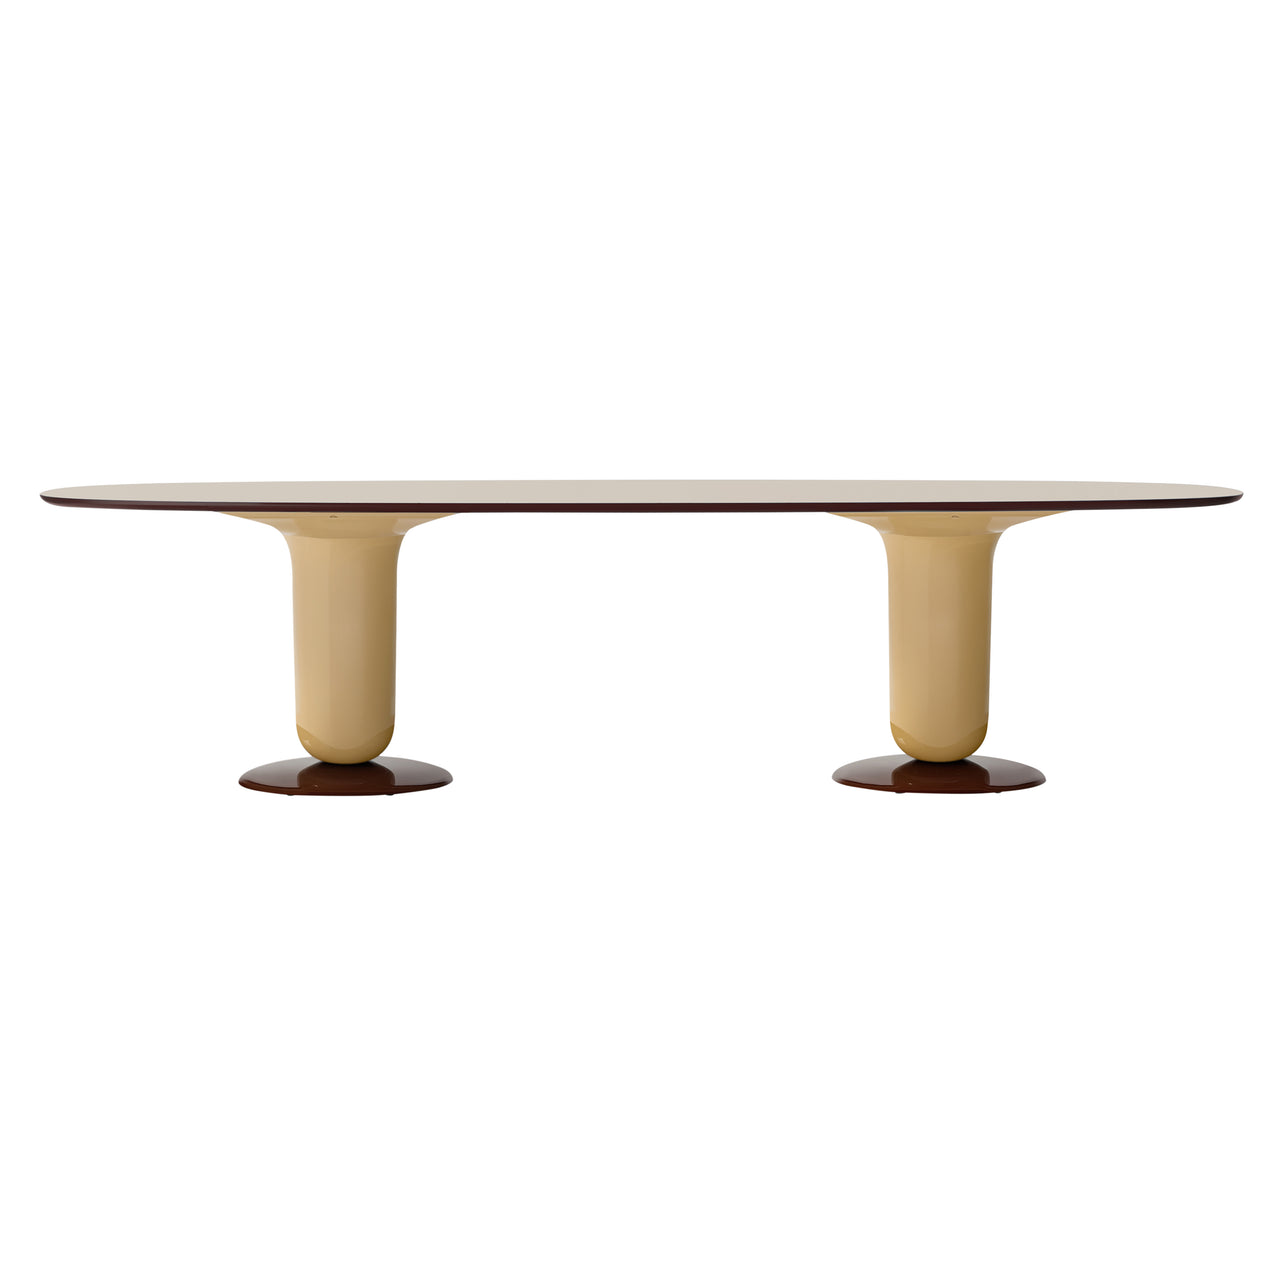 Explorer Oval Dining Table: Double Pedestal + Beige + Chocolate Brown + Beige + Chestnut Brown